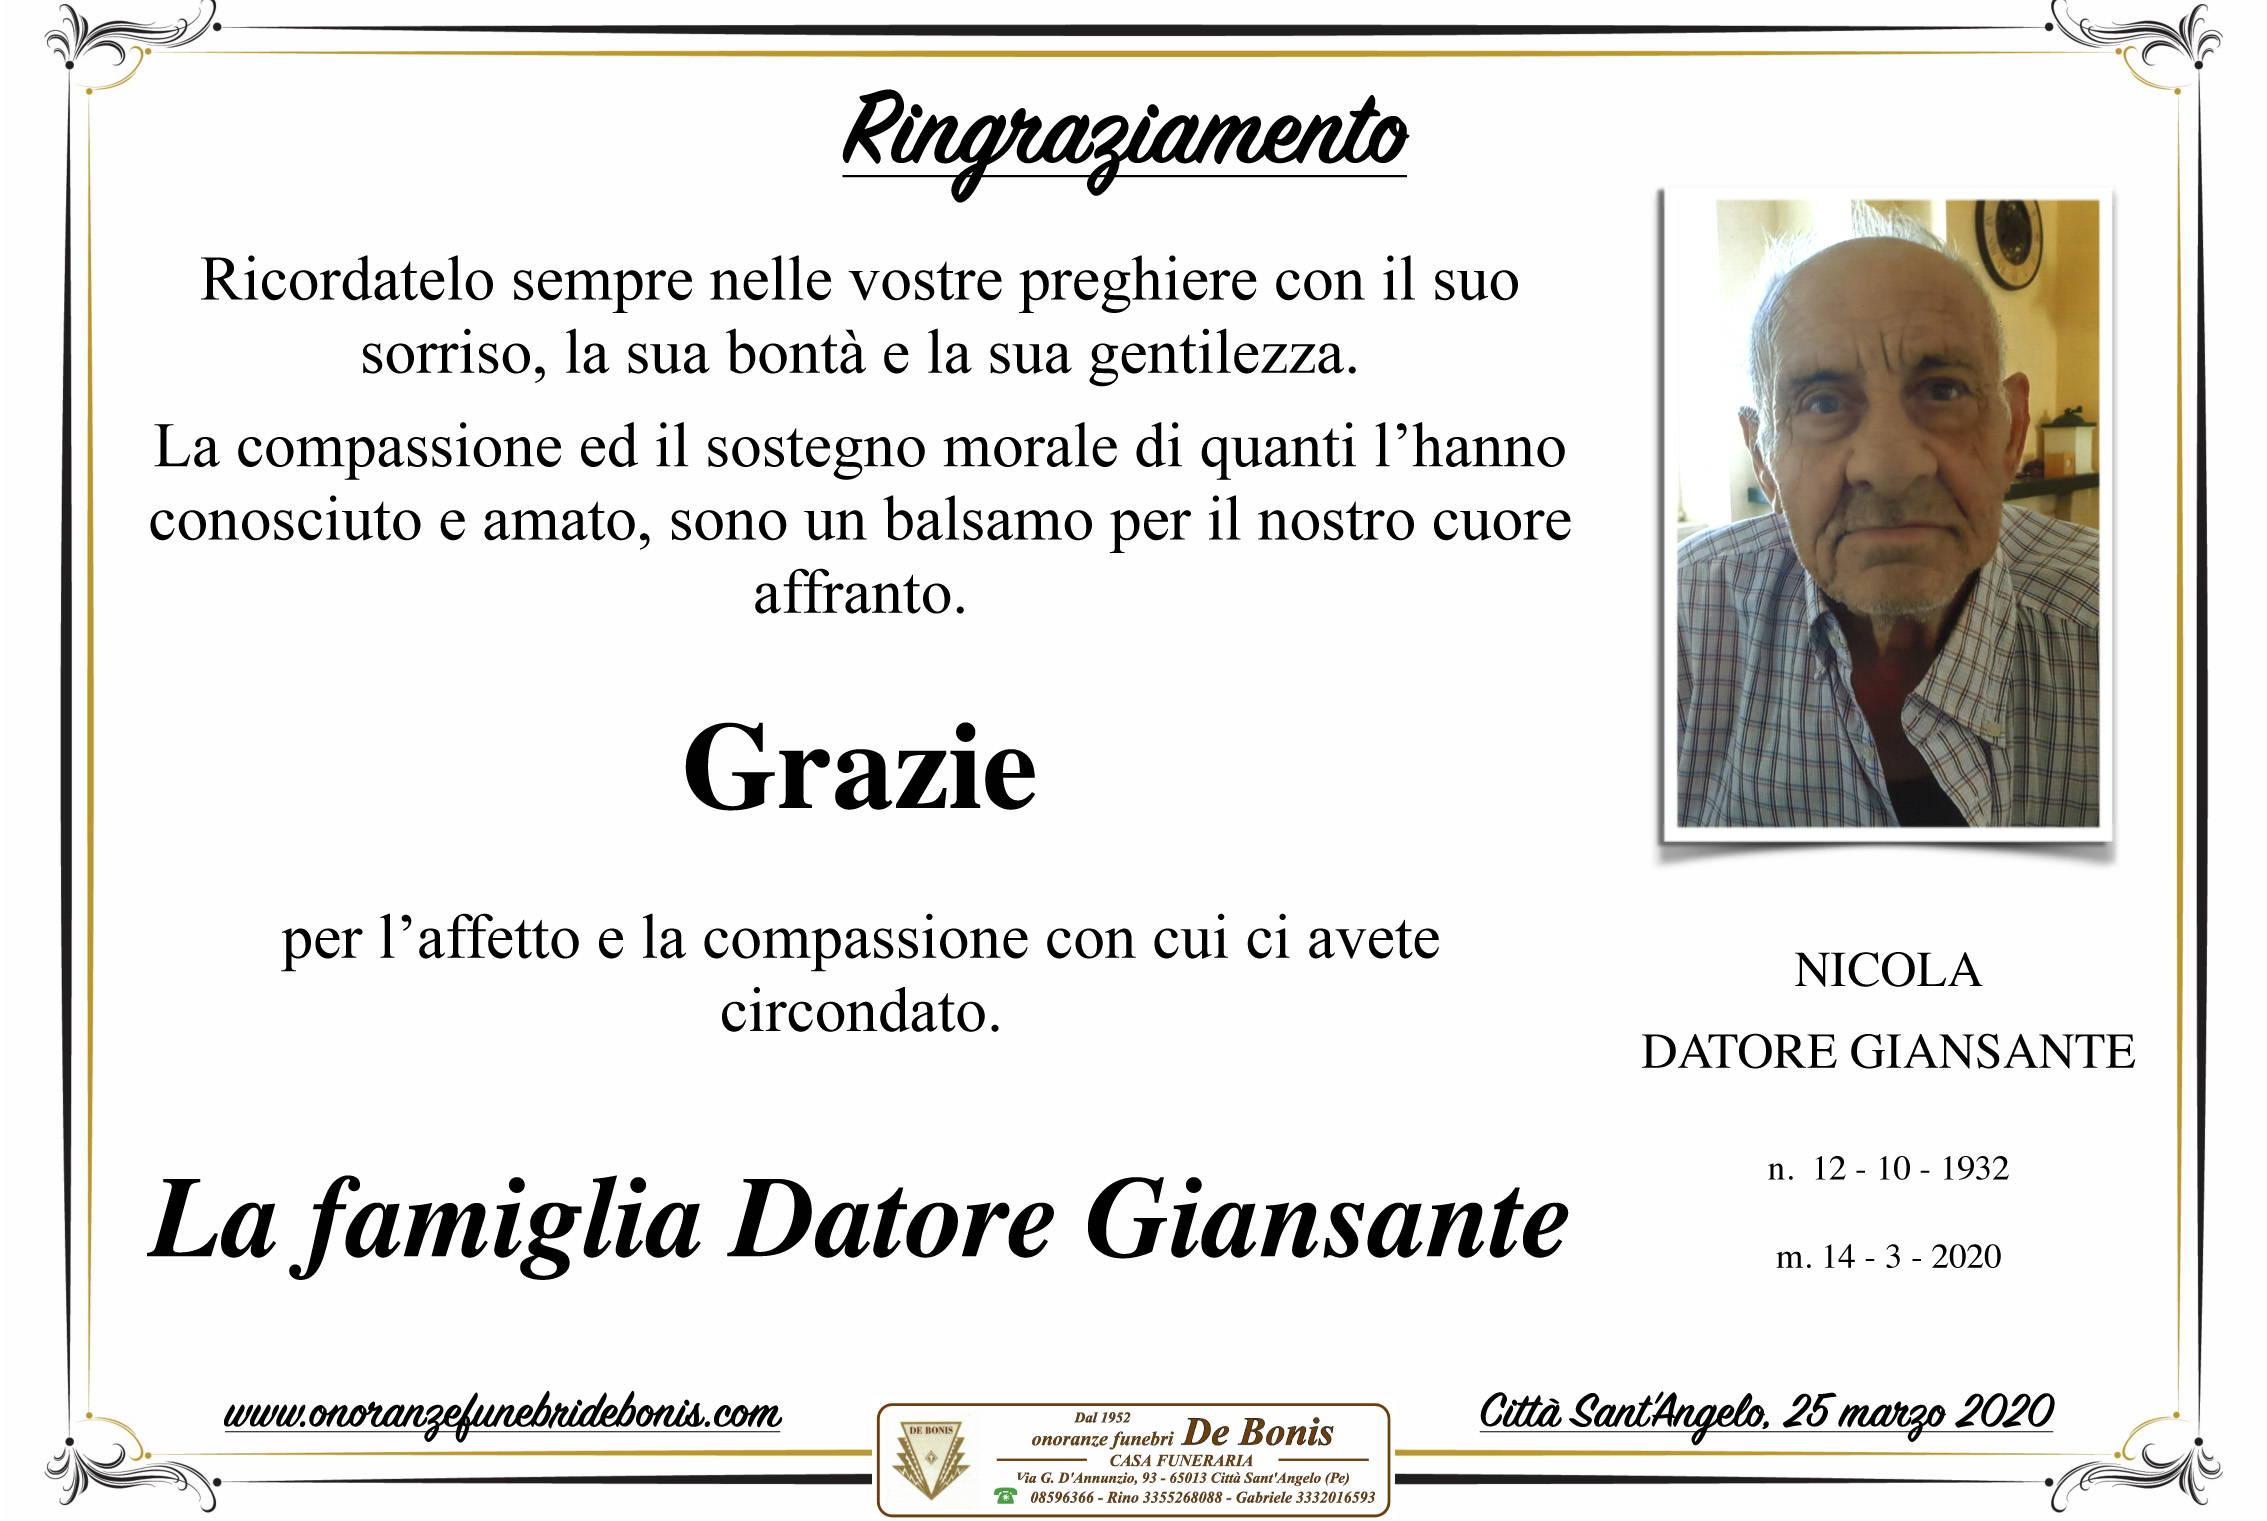 Nicola Datore Giansante